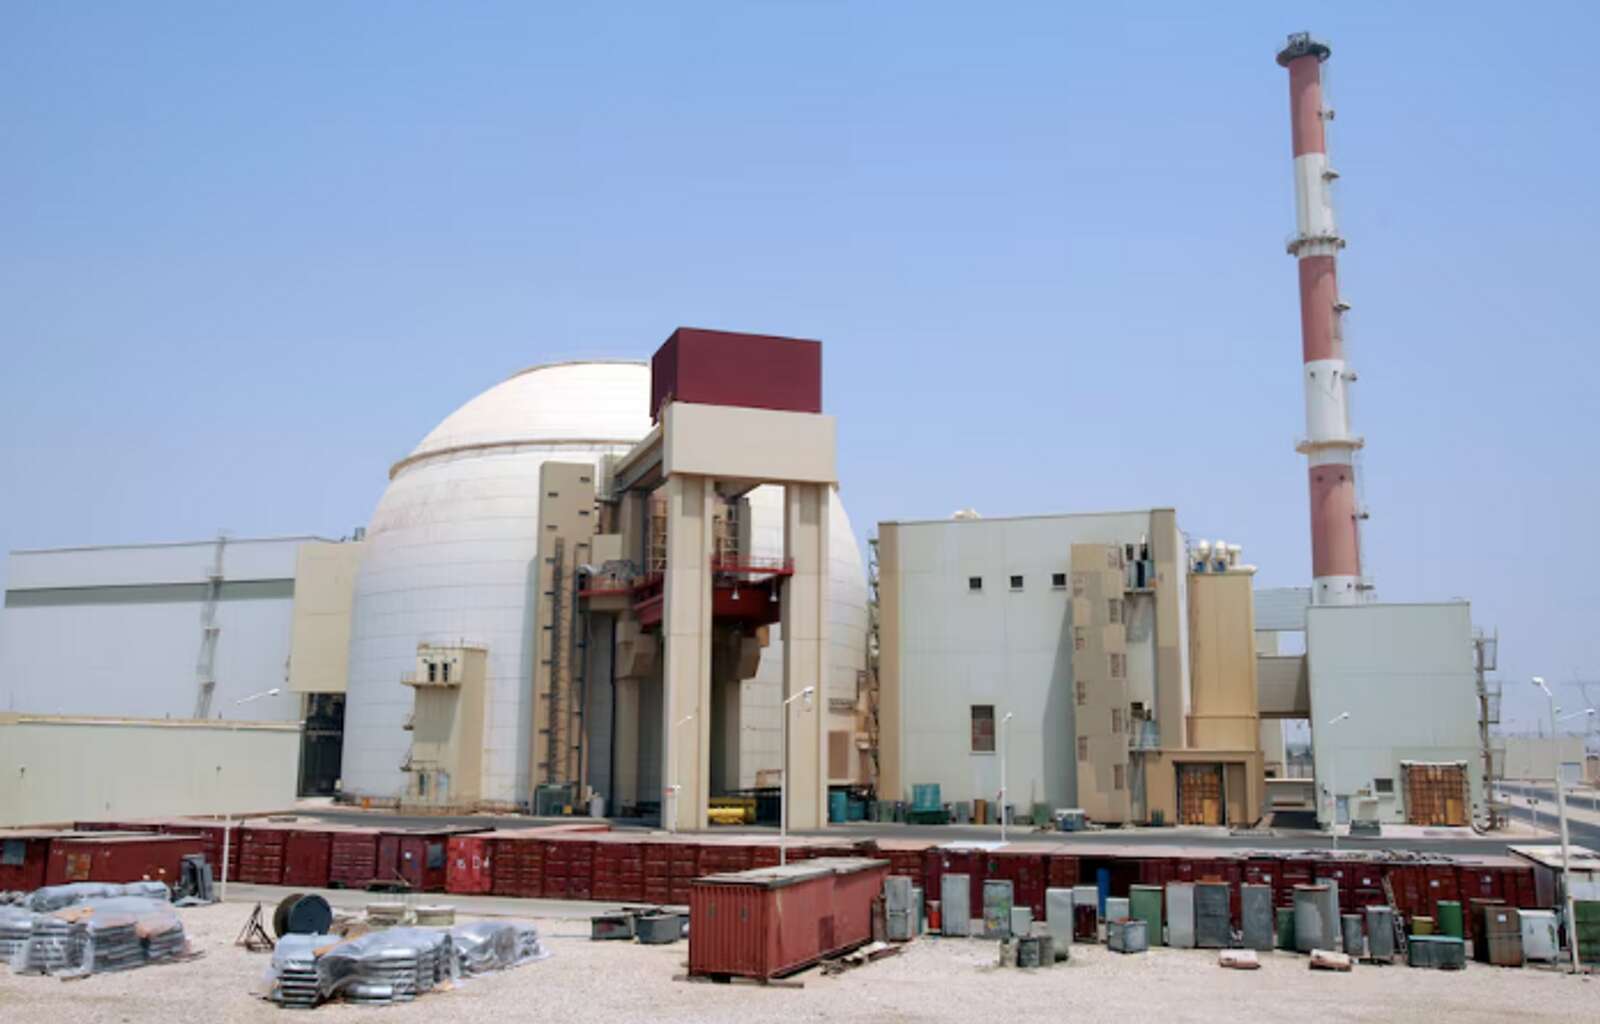 iran closed nuclear facilities in wake of israel attack: iaea chief